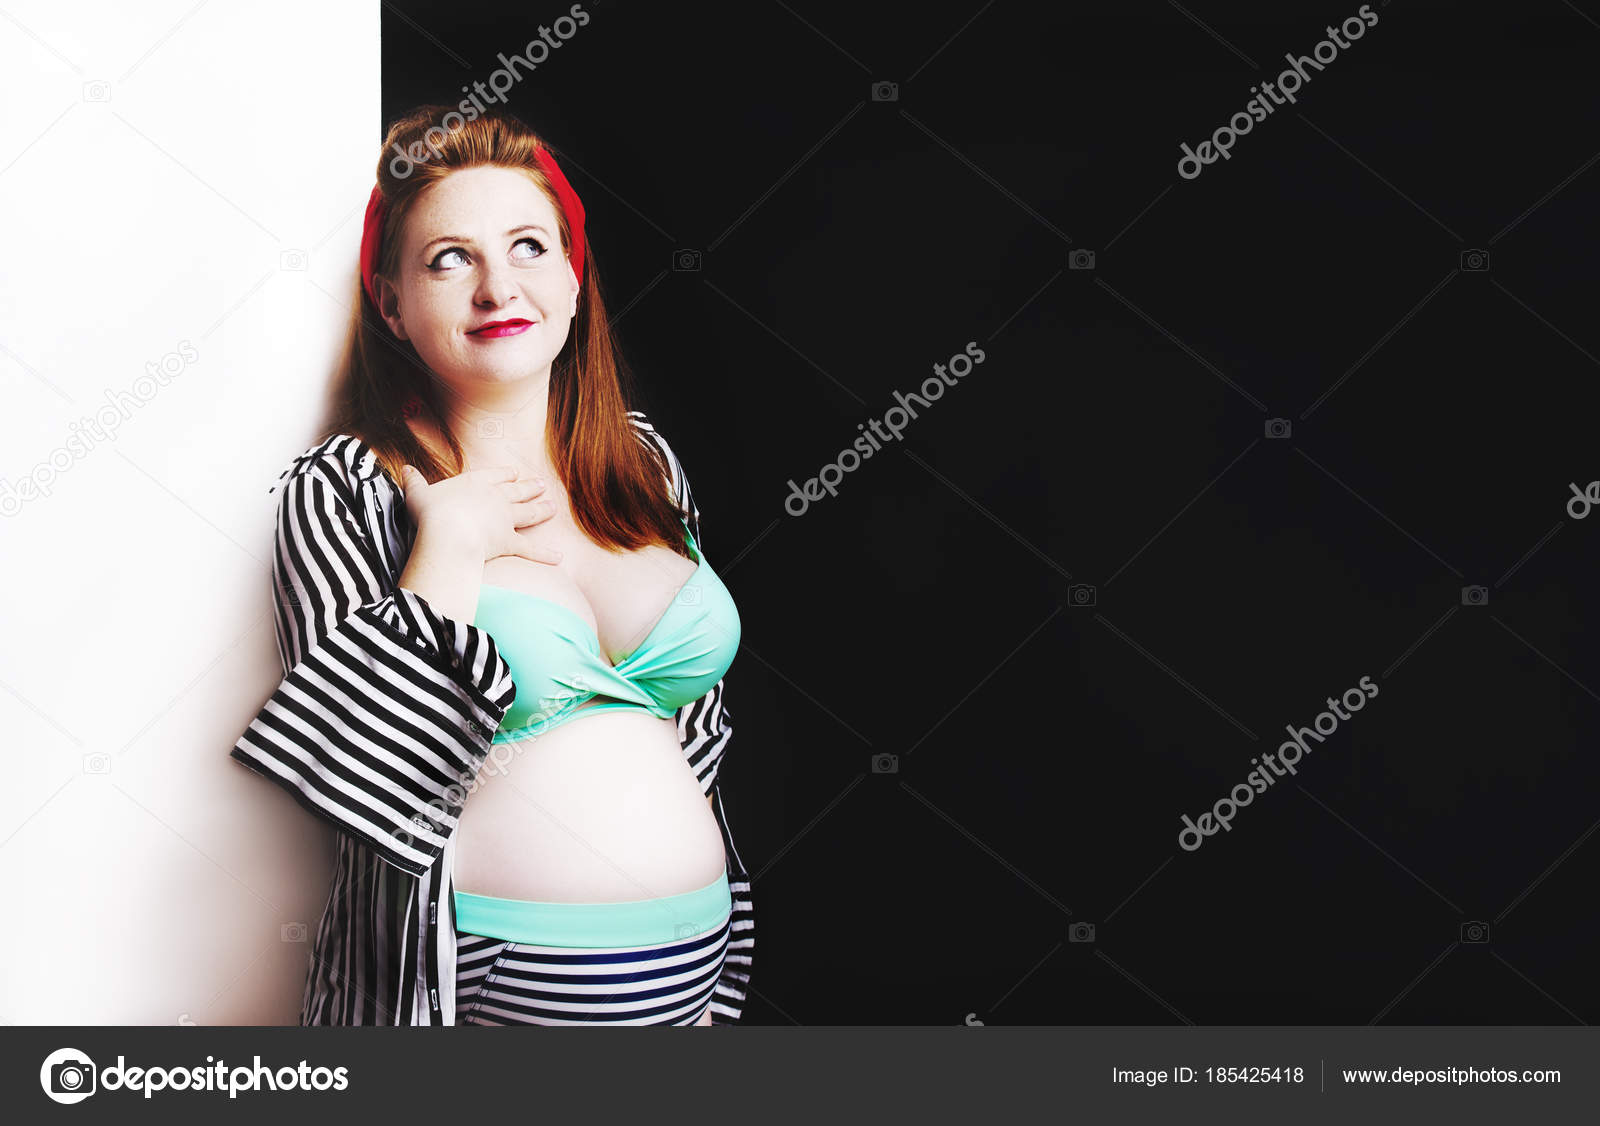 Pregnant Redhead All Archive